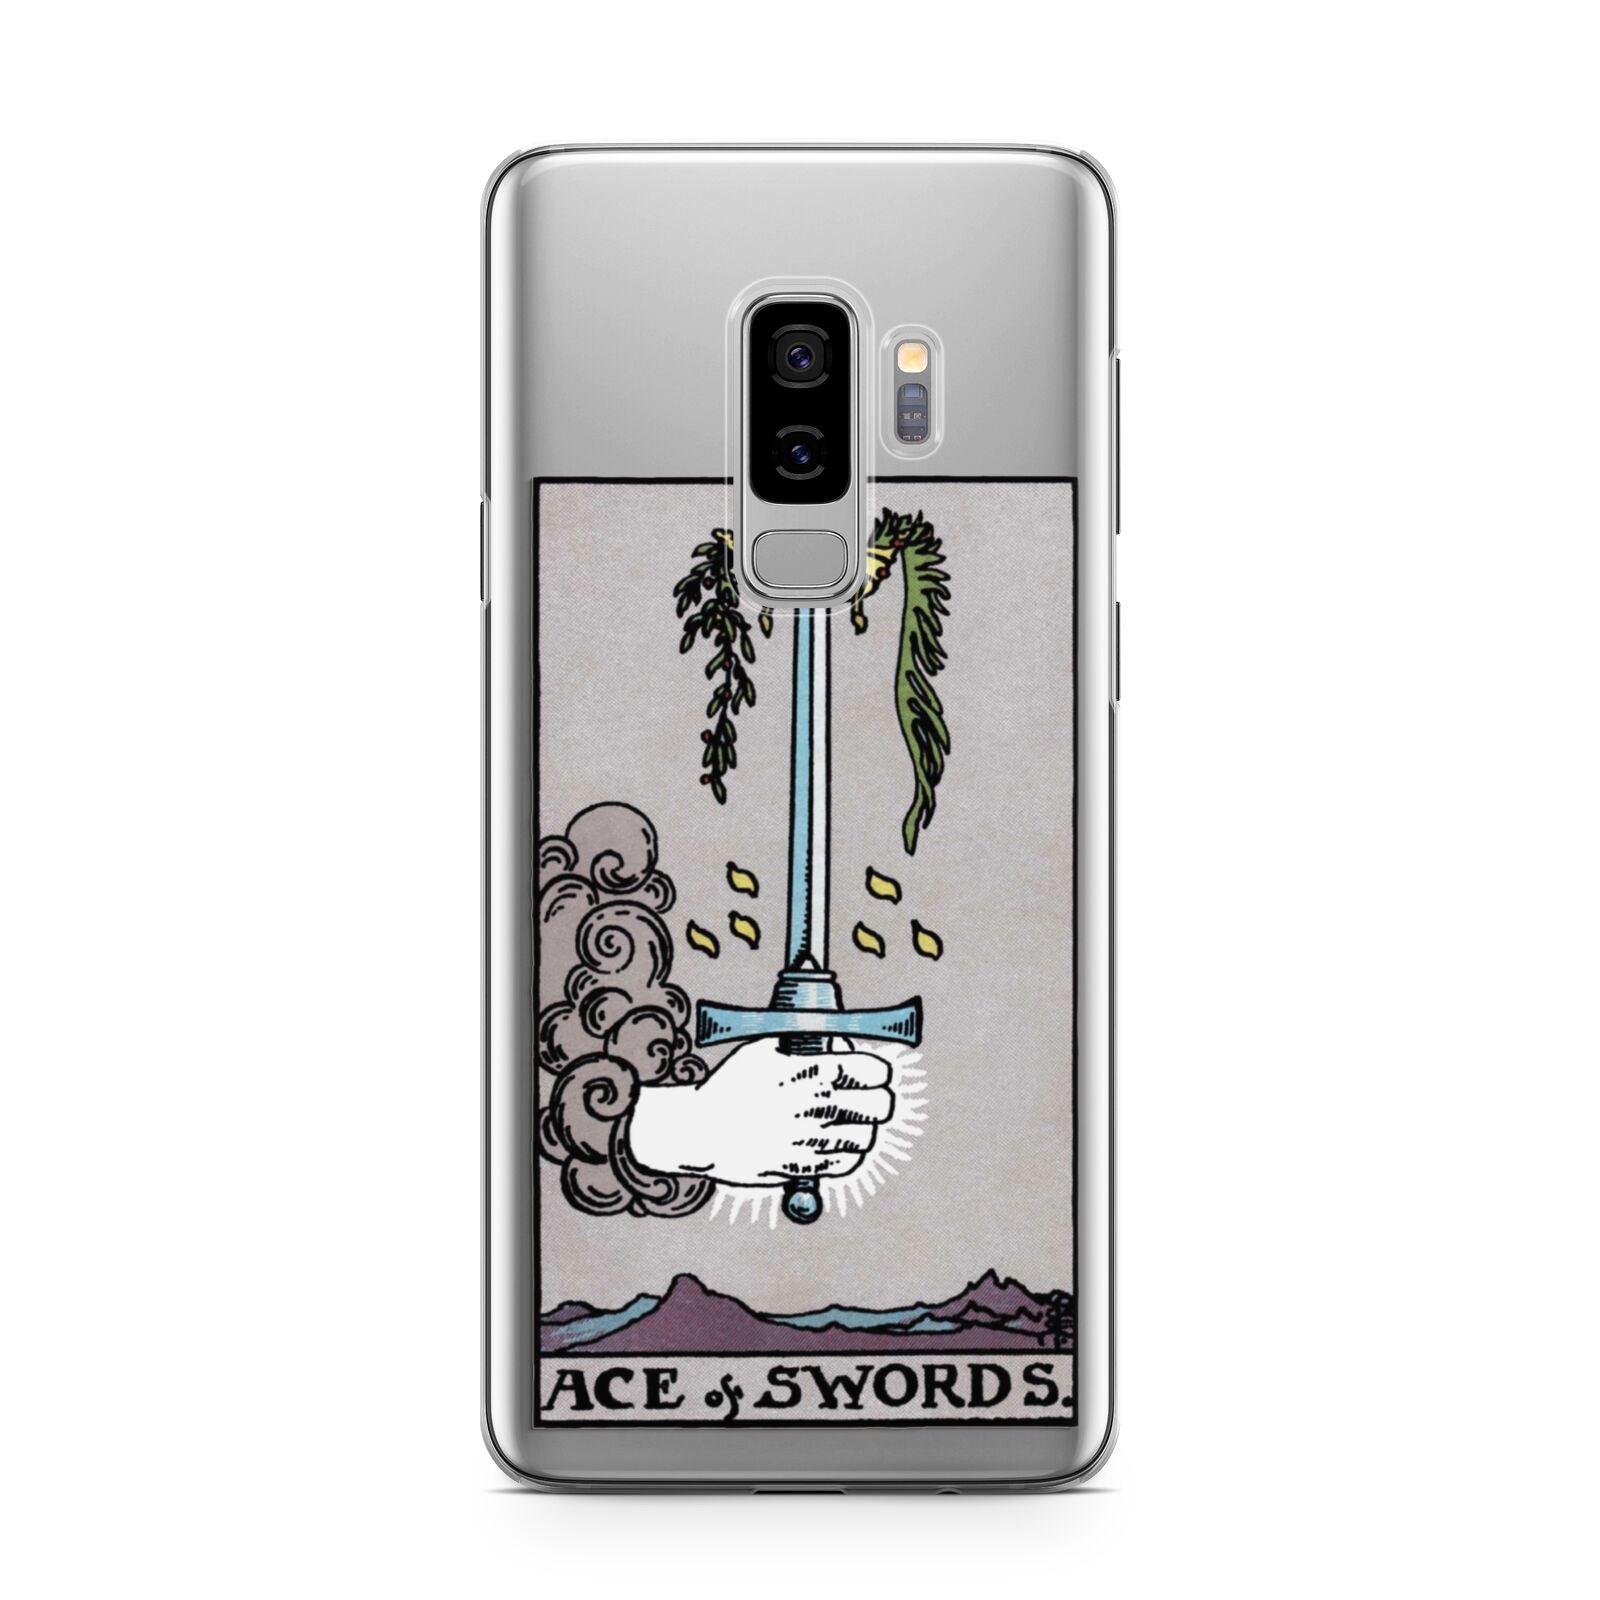 Ace of Swords Tarot Card Samsung Galaxy S9 Plus Case on Silver phone